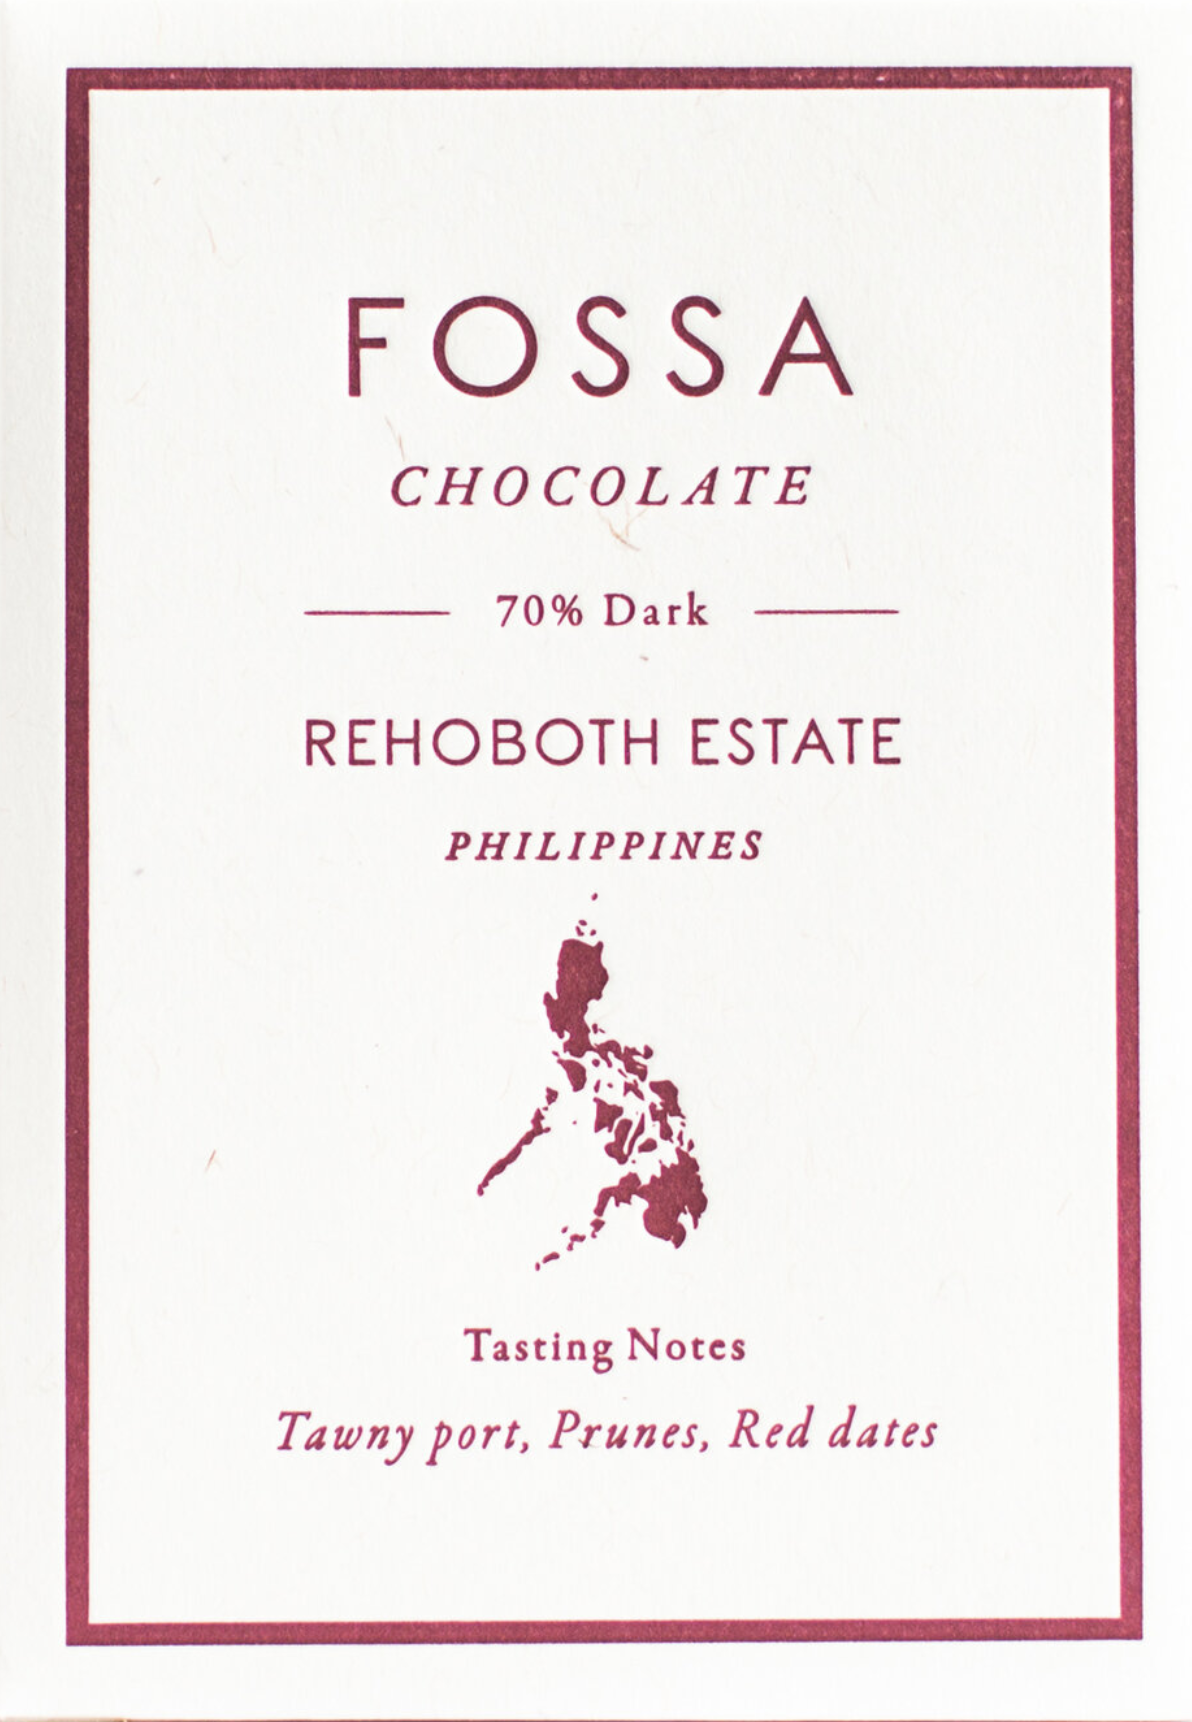 FOSSA Chocolate | Schokolade »Rehoboth Estate« Philippines 70% | 50g